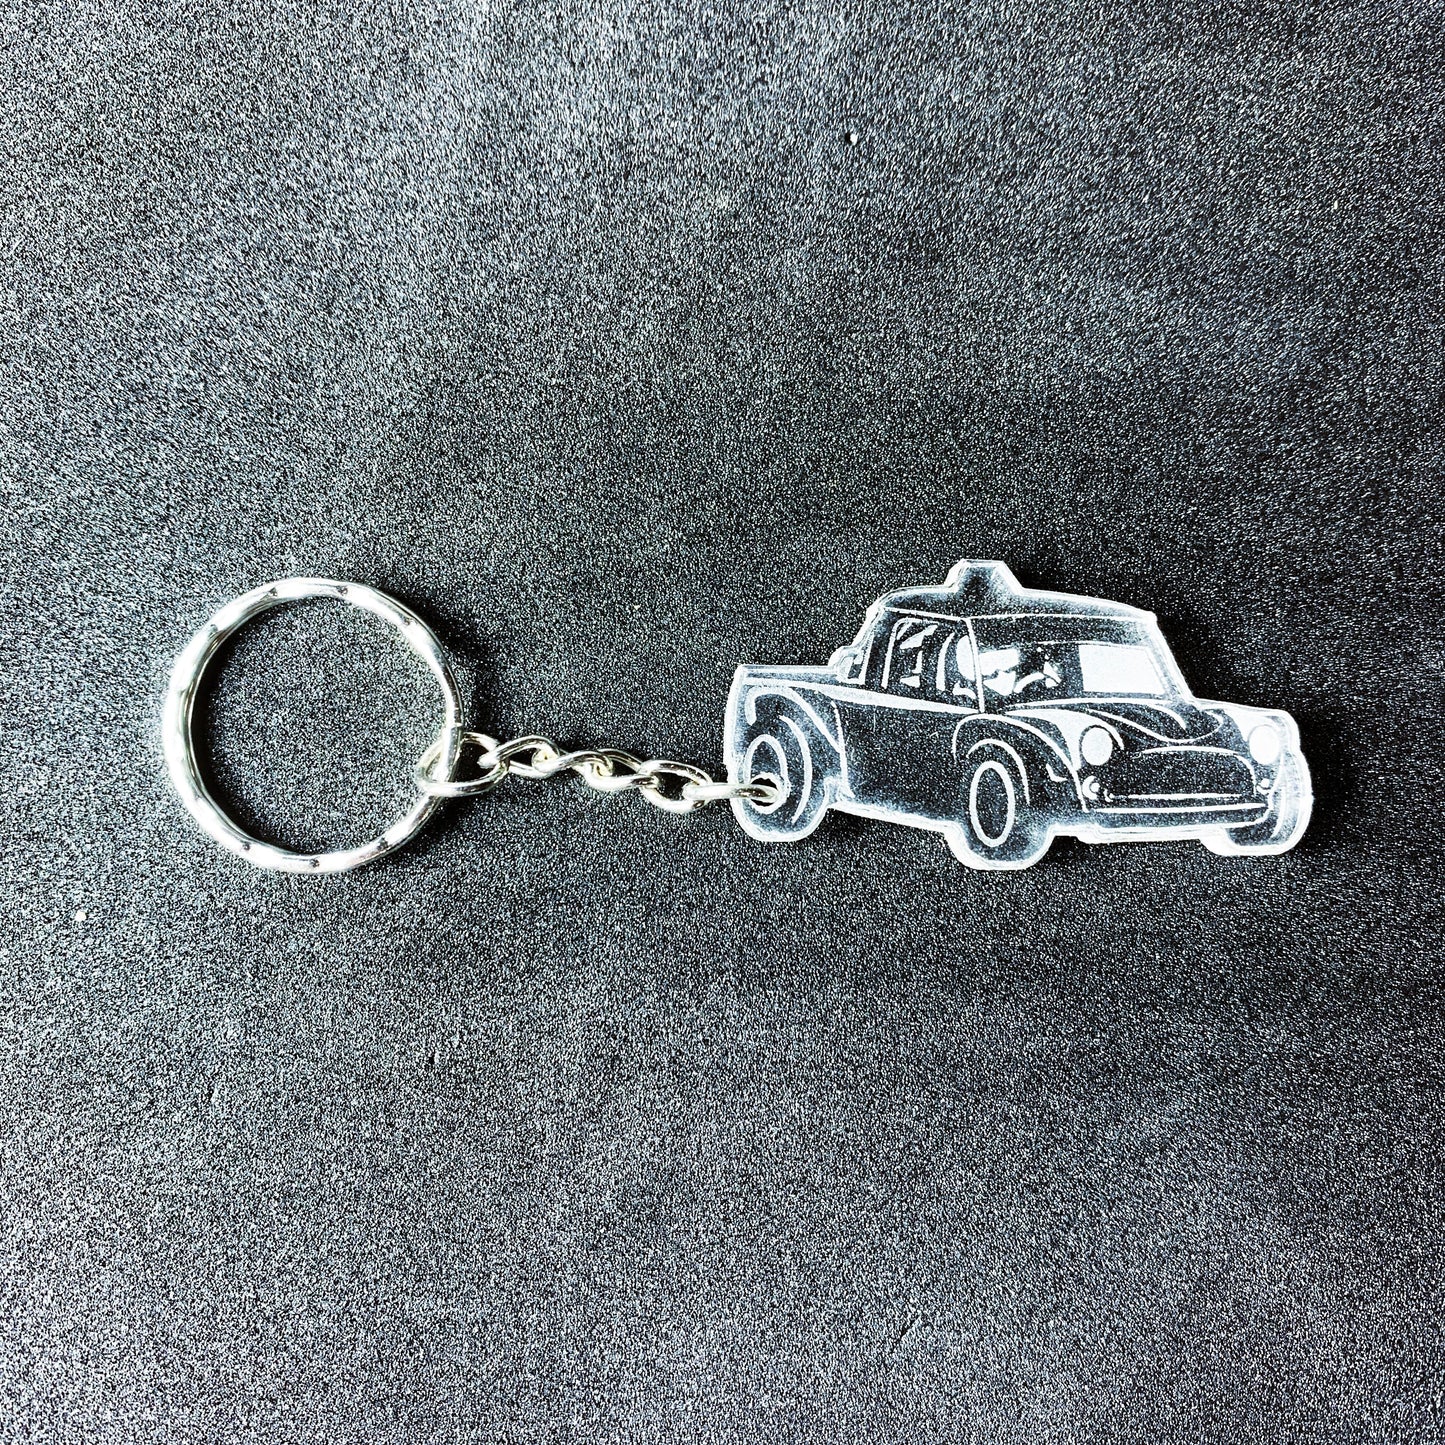 Class 5 Mini Saloon Autograss Keyring - Key Ring - Stock Car & Banger Toy Tracks